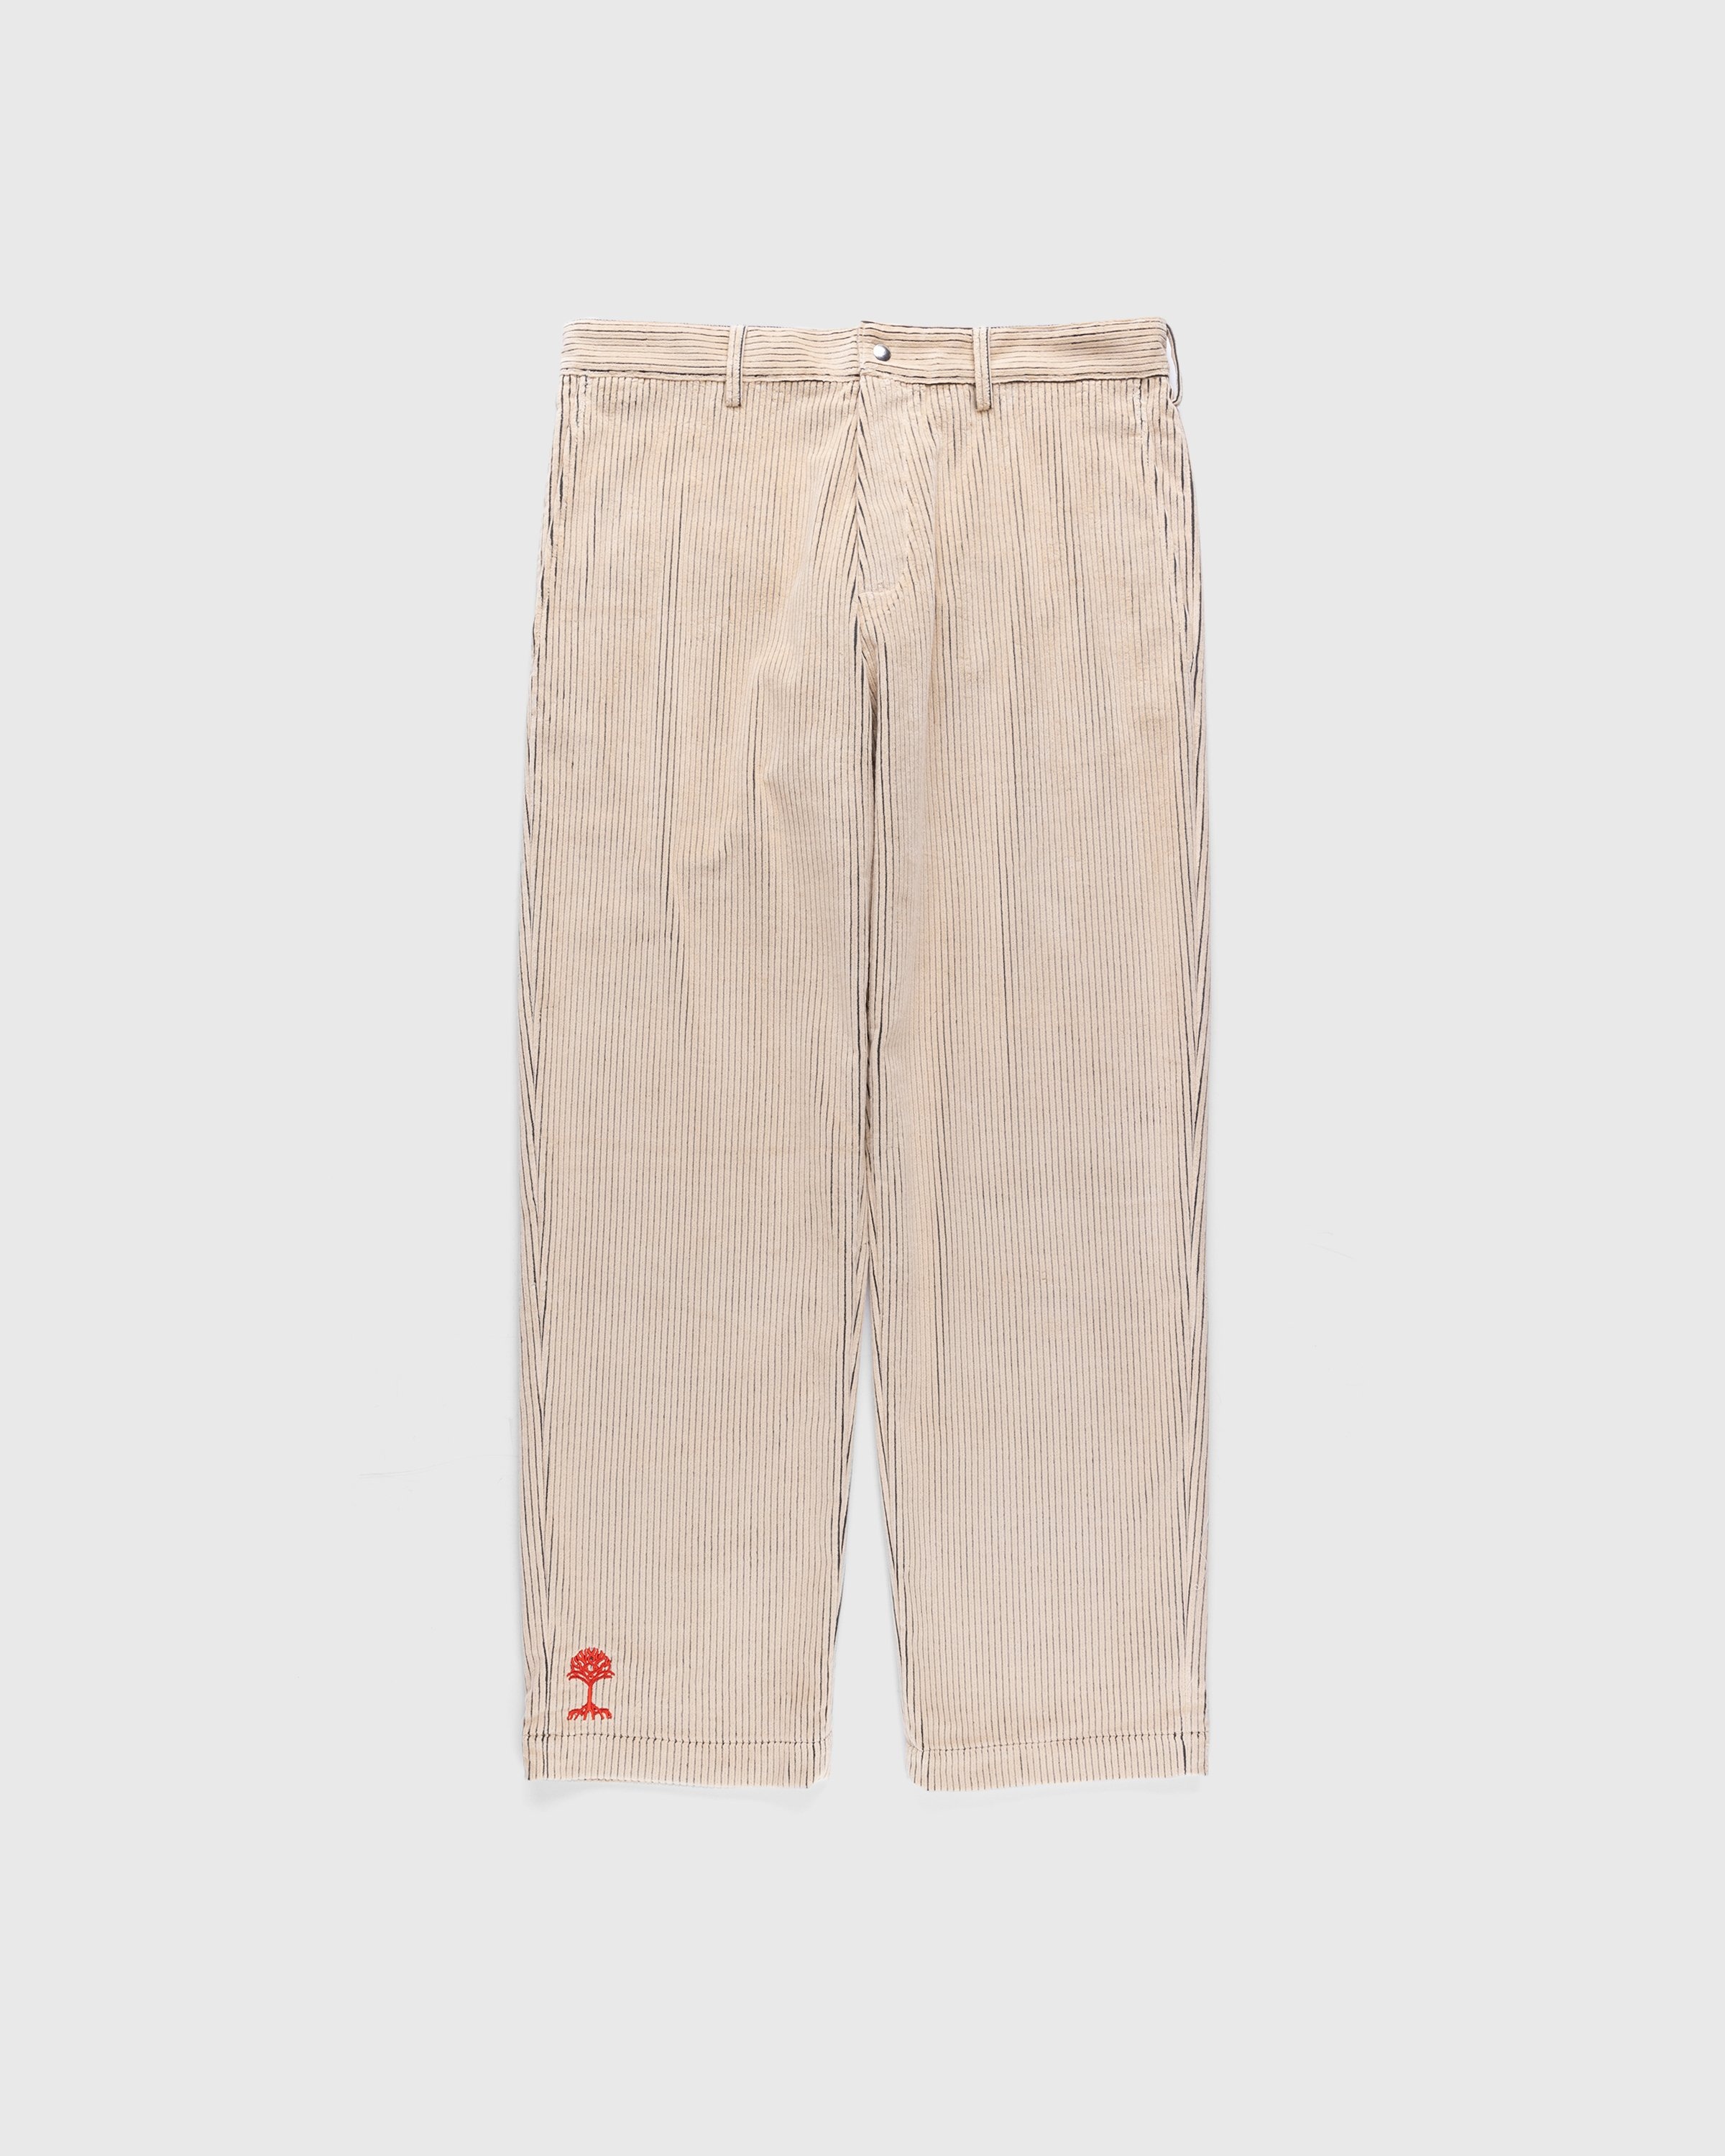 RANRA – Madur Corduroy Trouser Beige - Trousers - Beige - Image 1